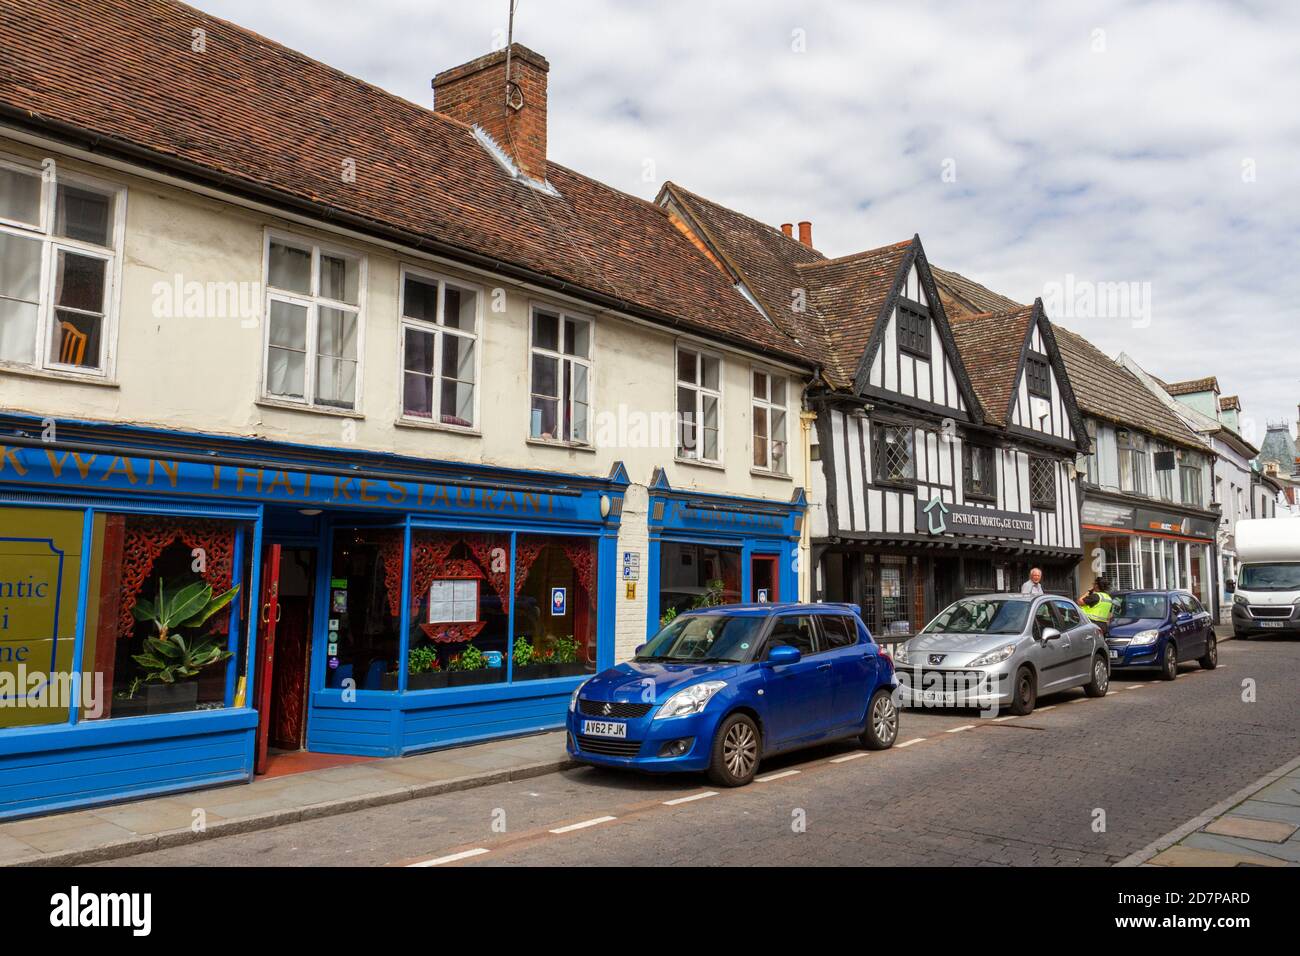 General view of shops on St Nicholas Street in Ipswich, Suffolk, UK. Stock Photo